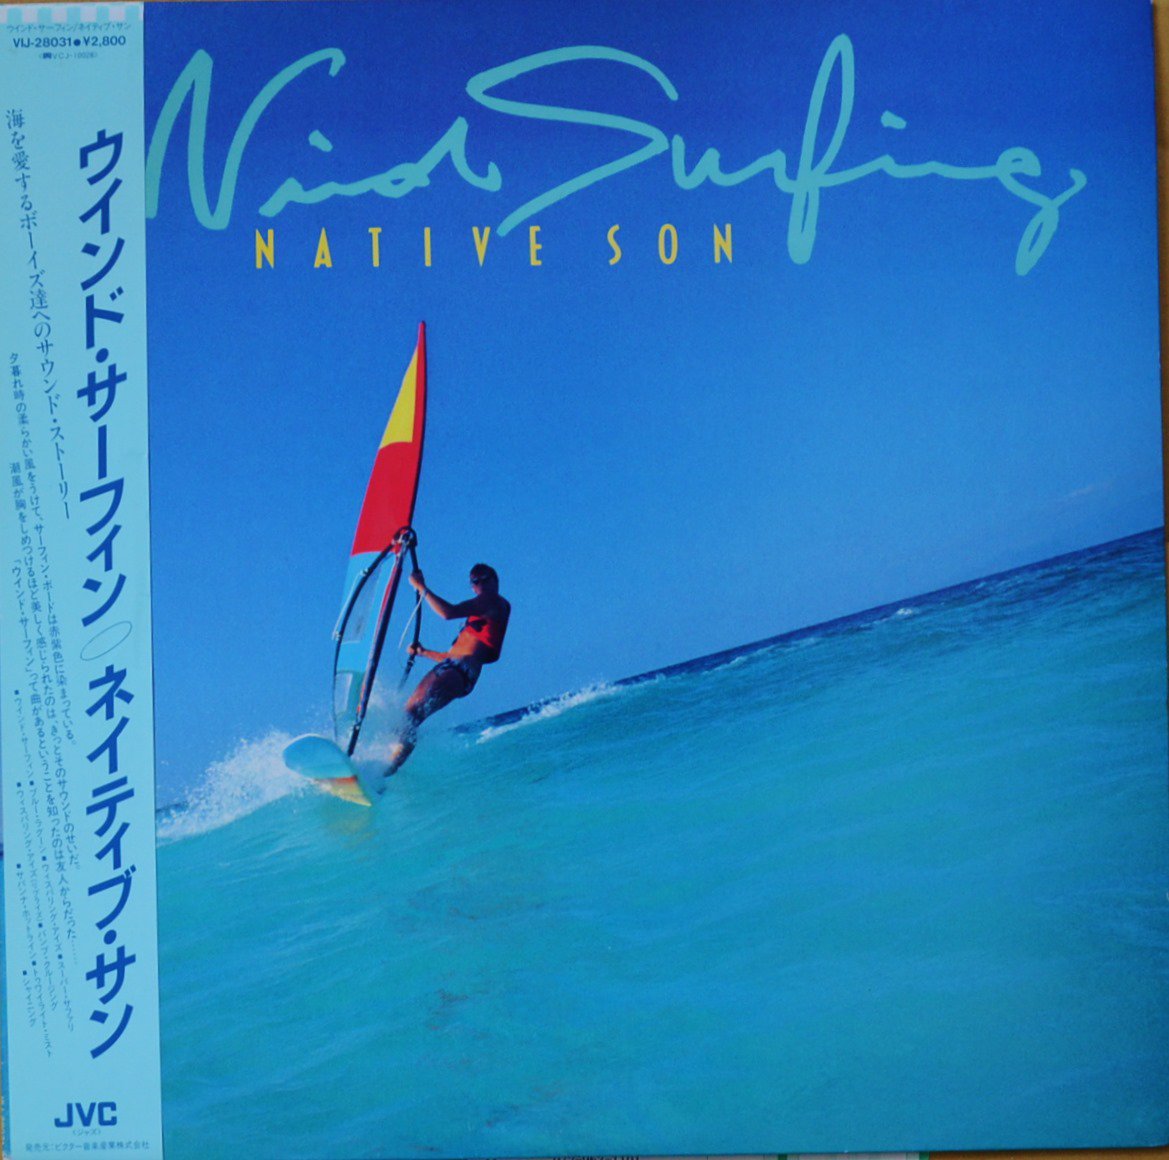 NATIVE SON ネイティブ・サン / ウインド・サーフィン WIND SURFING (LP)